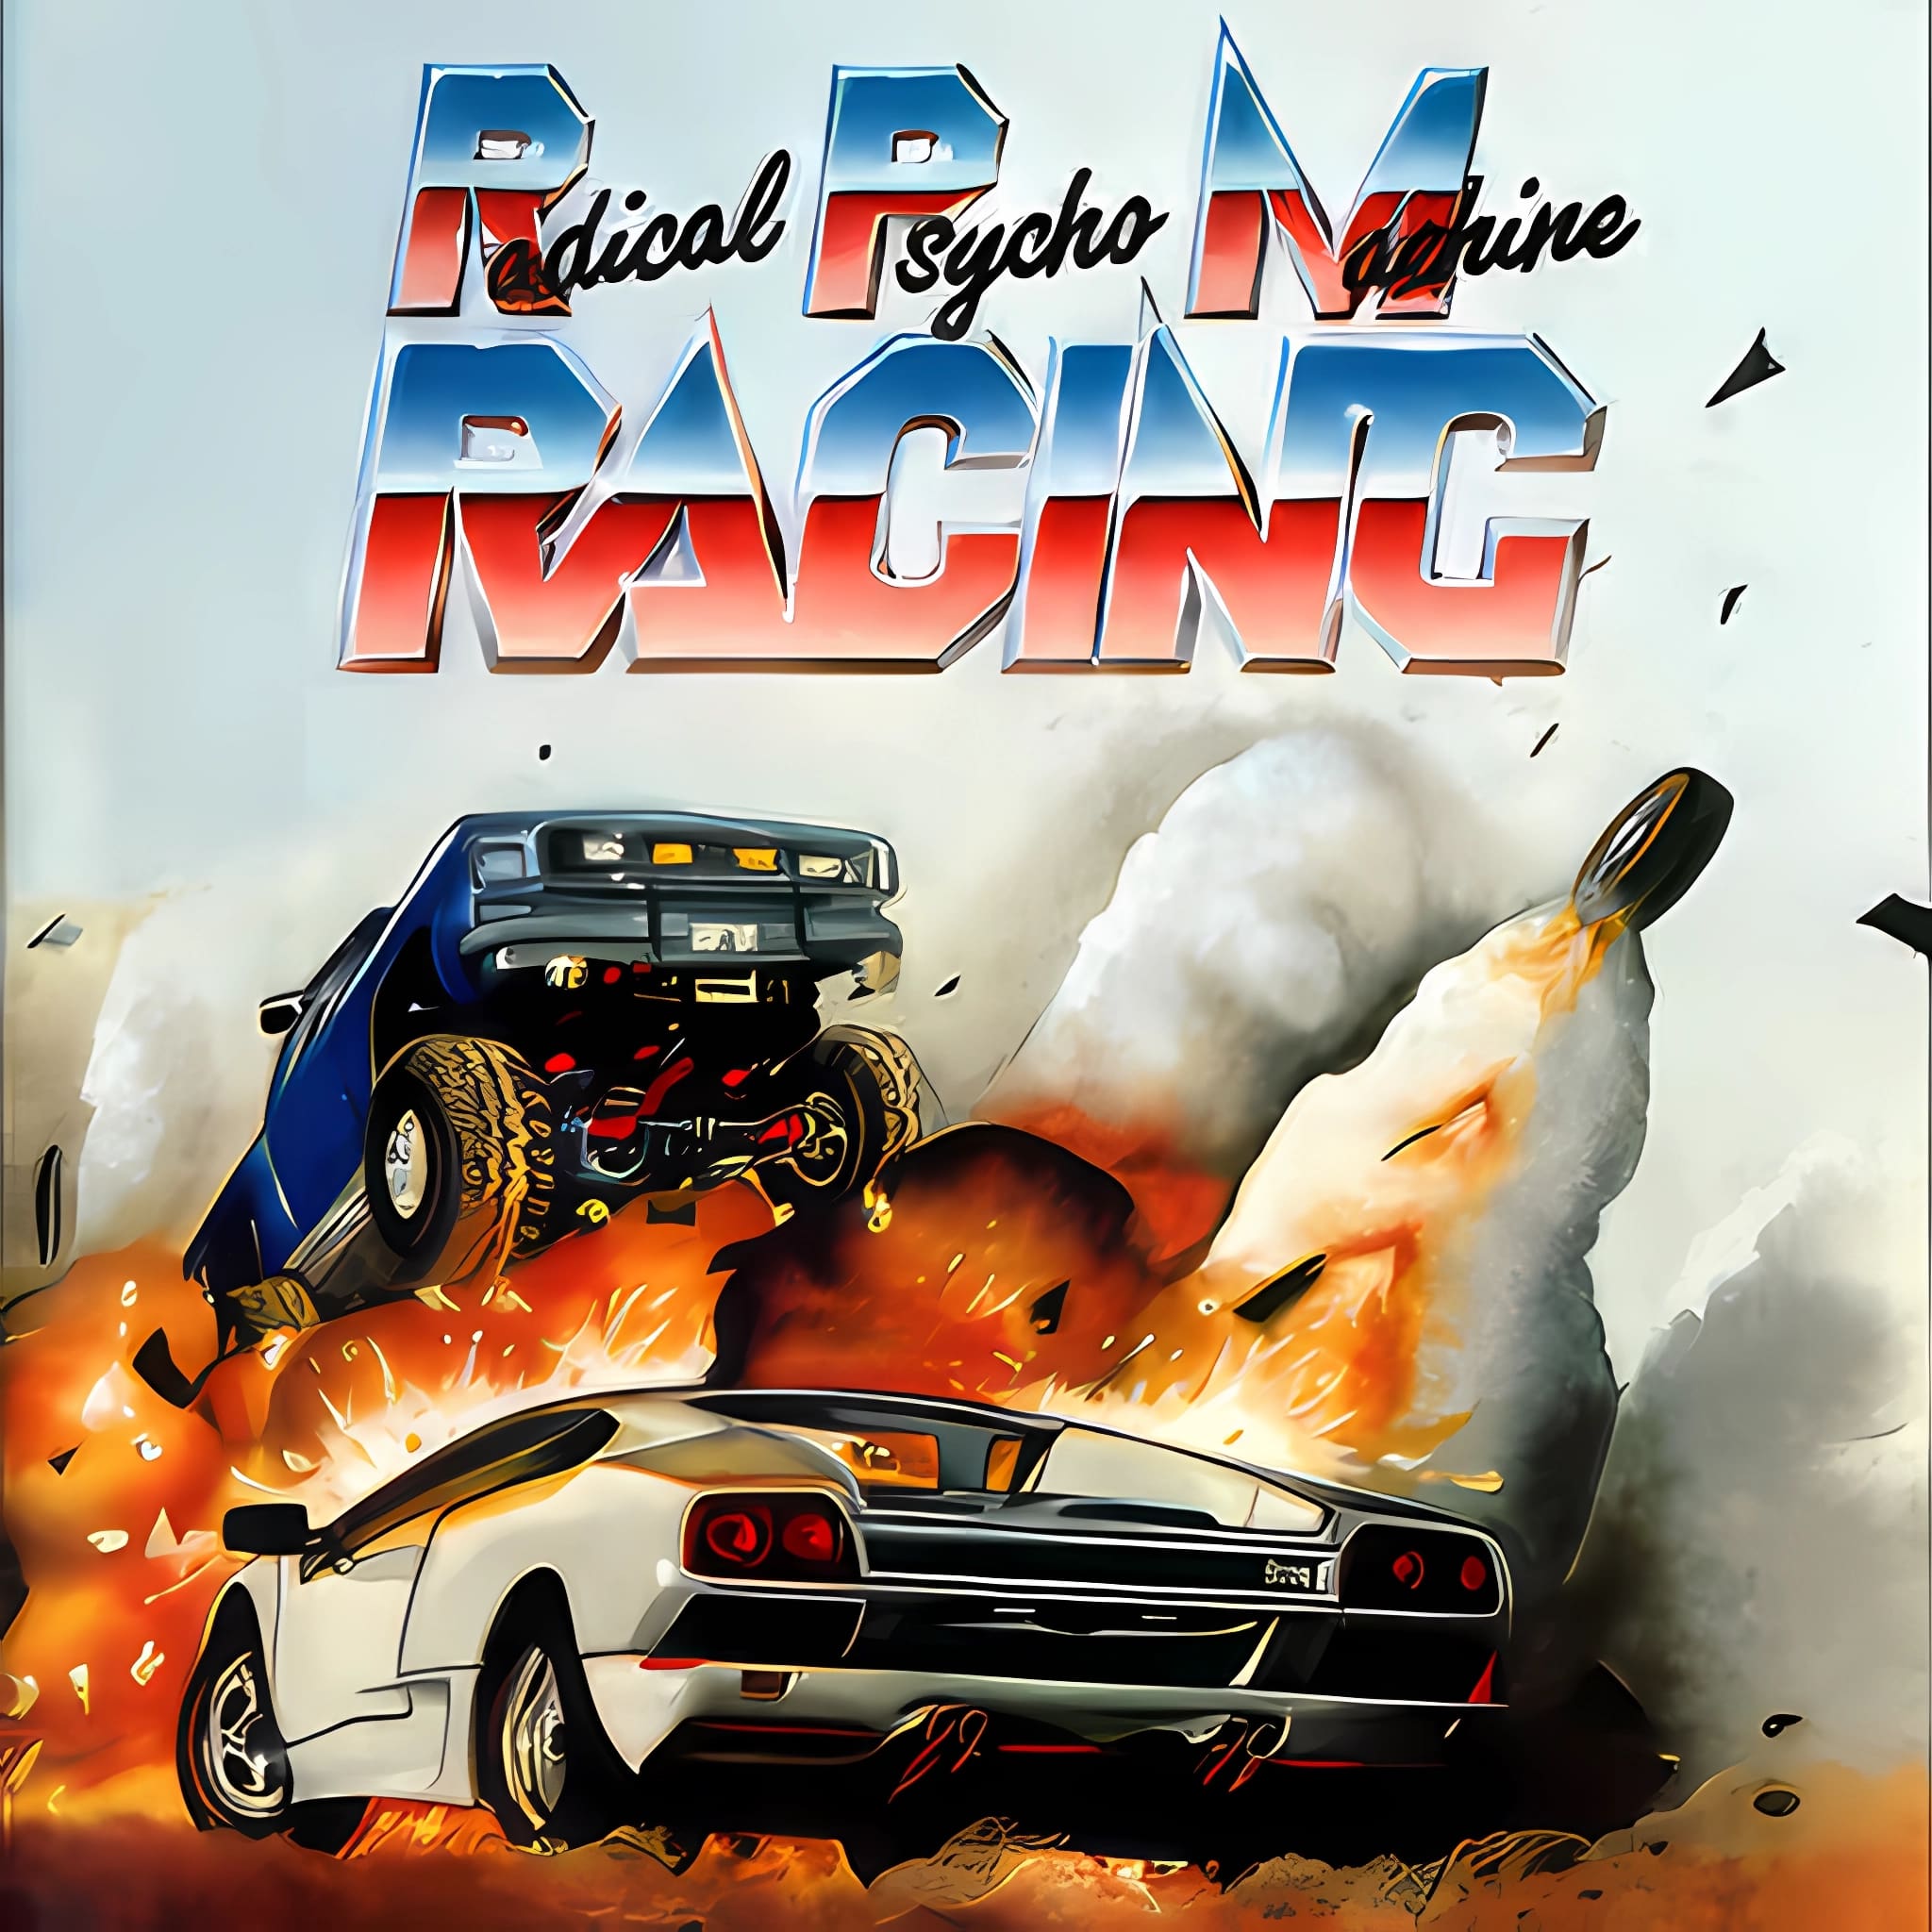 RPM Racing